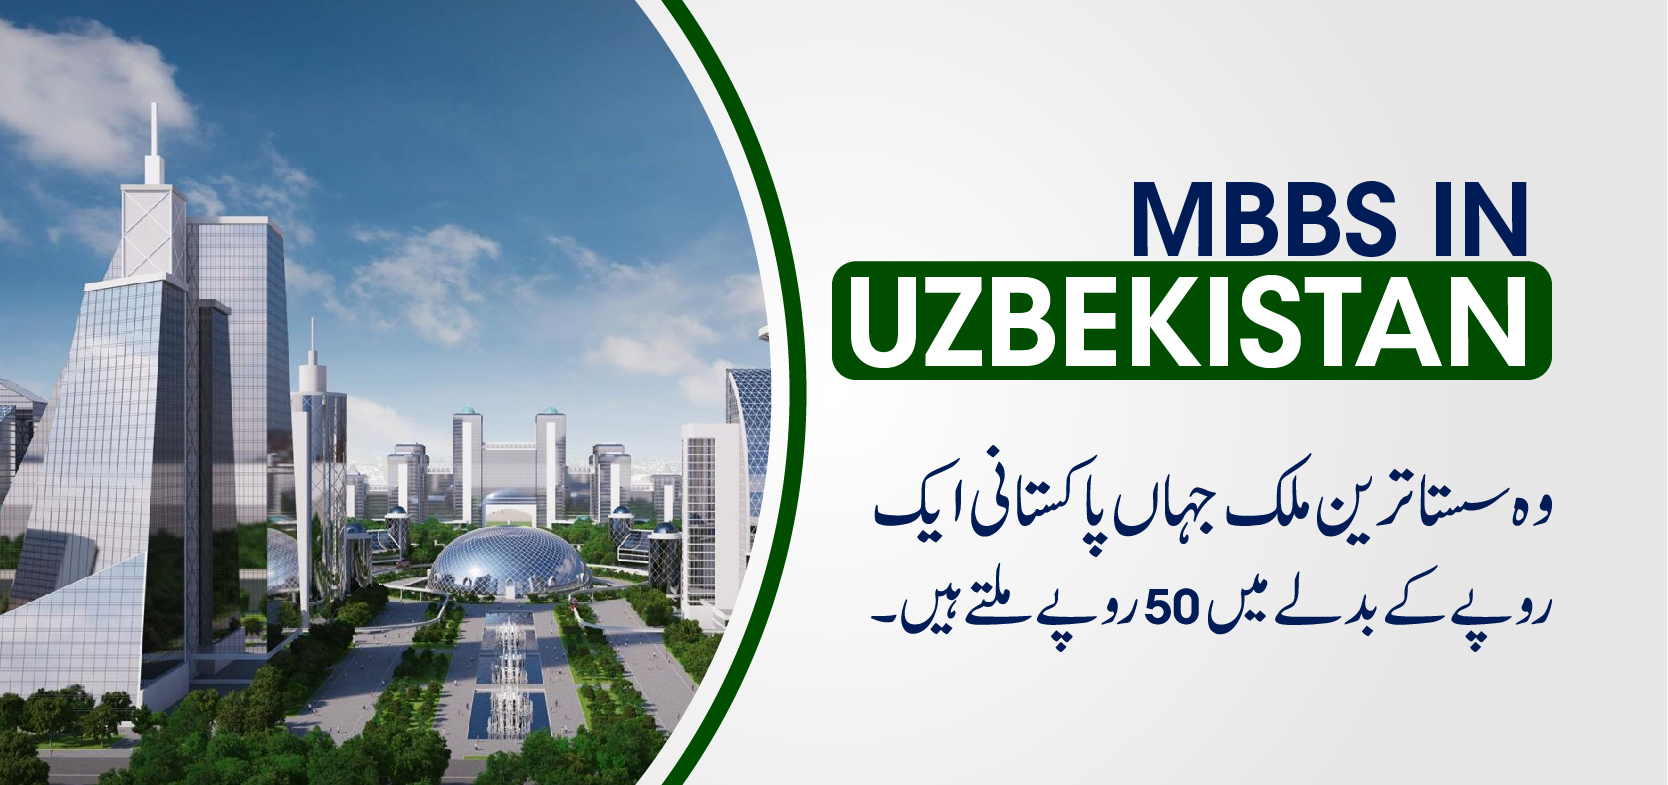 MBBS in Uzbekistan for Pakistani students 2022-2023: